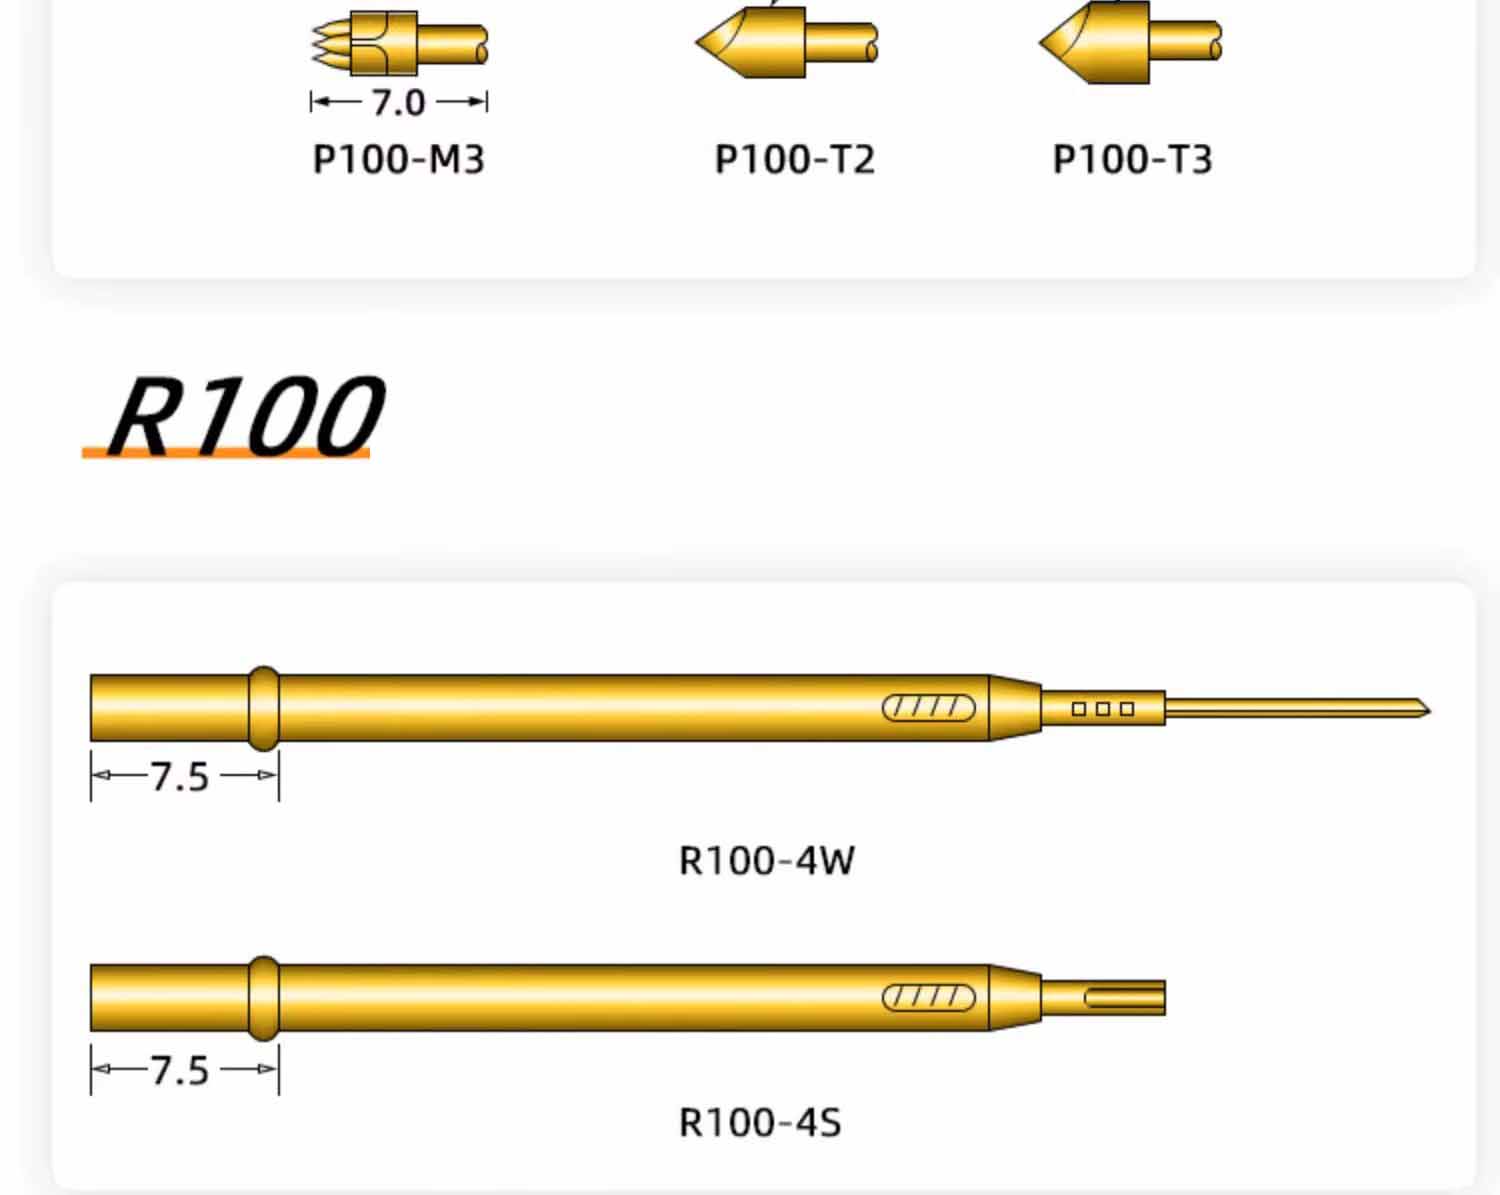 R100 probe pin